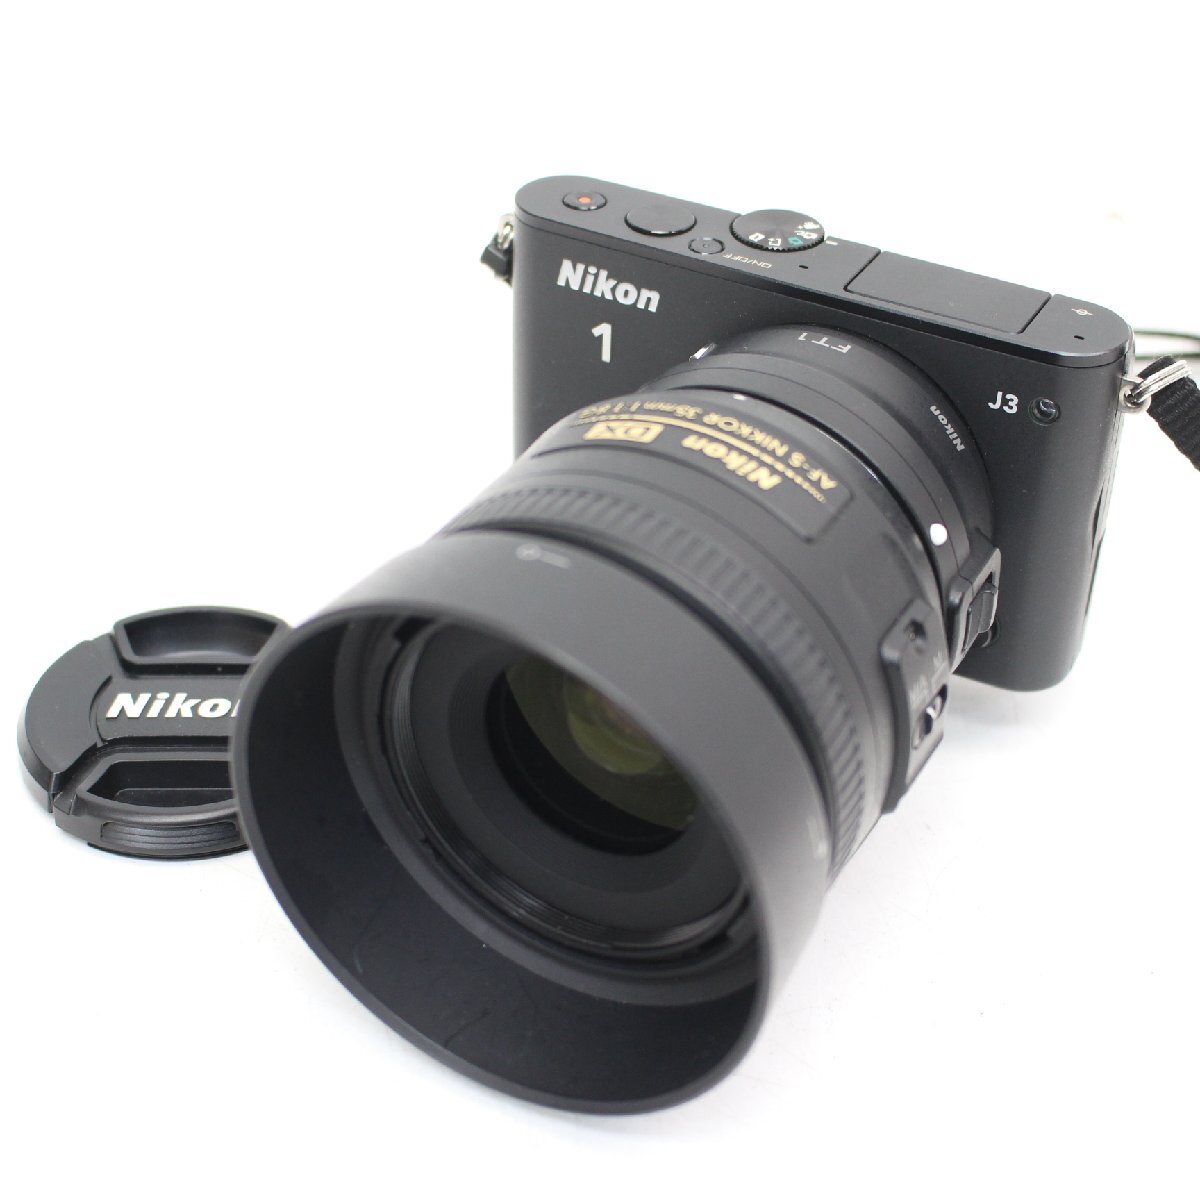 589)NIKON ニコン 1 J3 ミラーレス一眼レフカメラ レンズ AF-S NIKKOR 35mm 1:1.8G DXの画像1